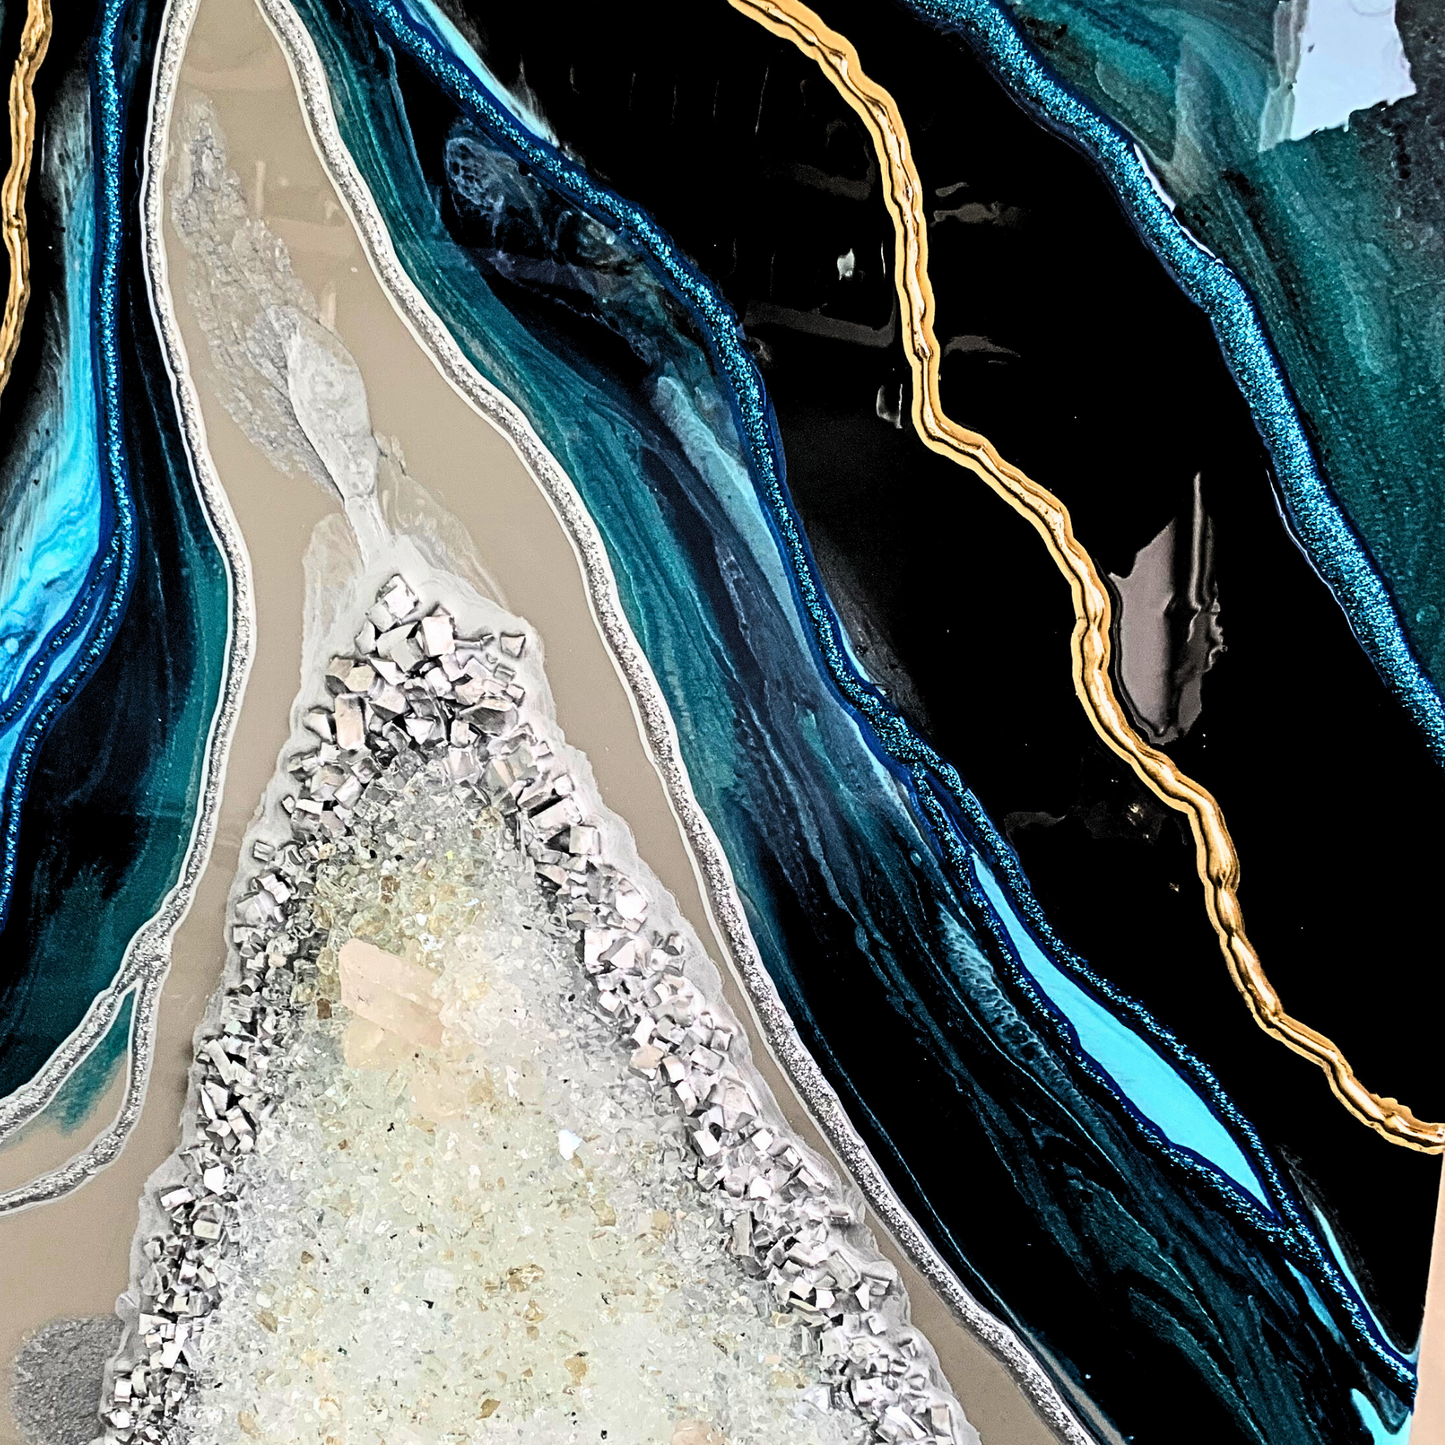 "GODDESS" GEODE Modern Resin Art Geode with Real Crystal Quartz Points